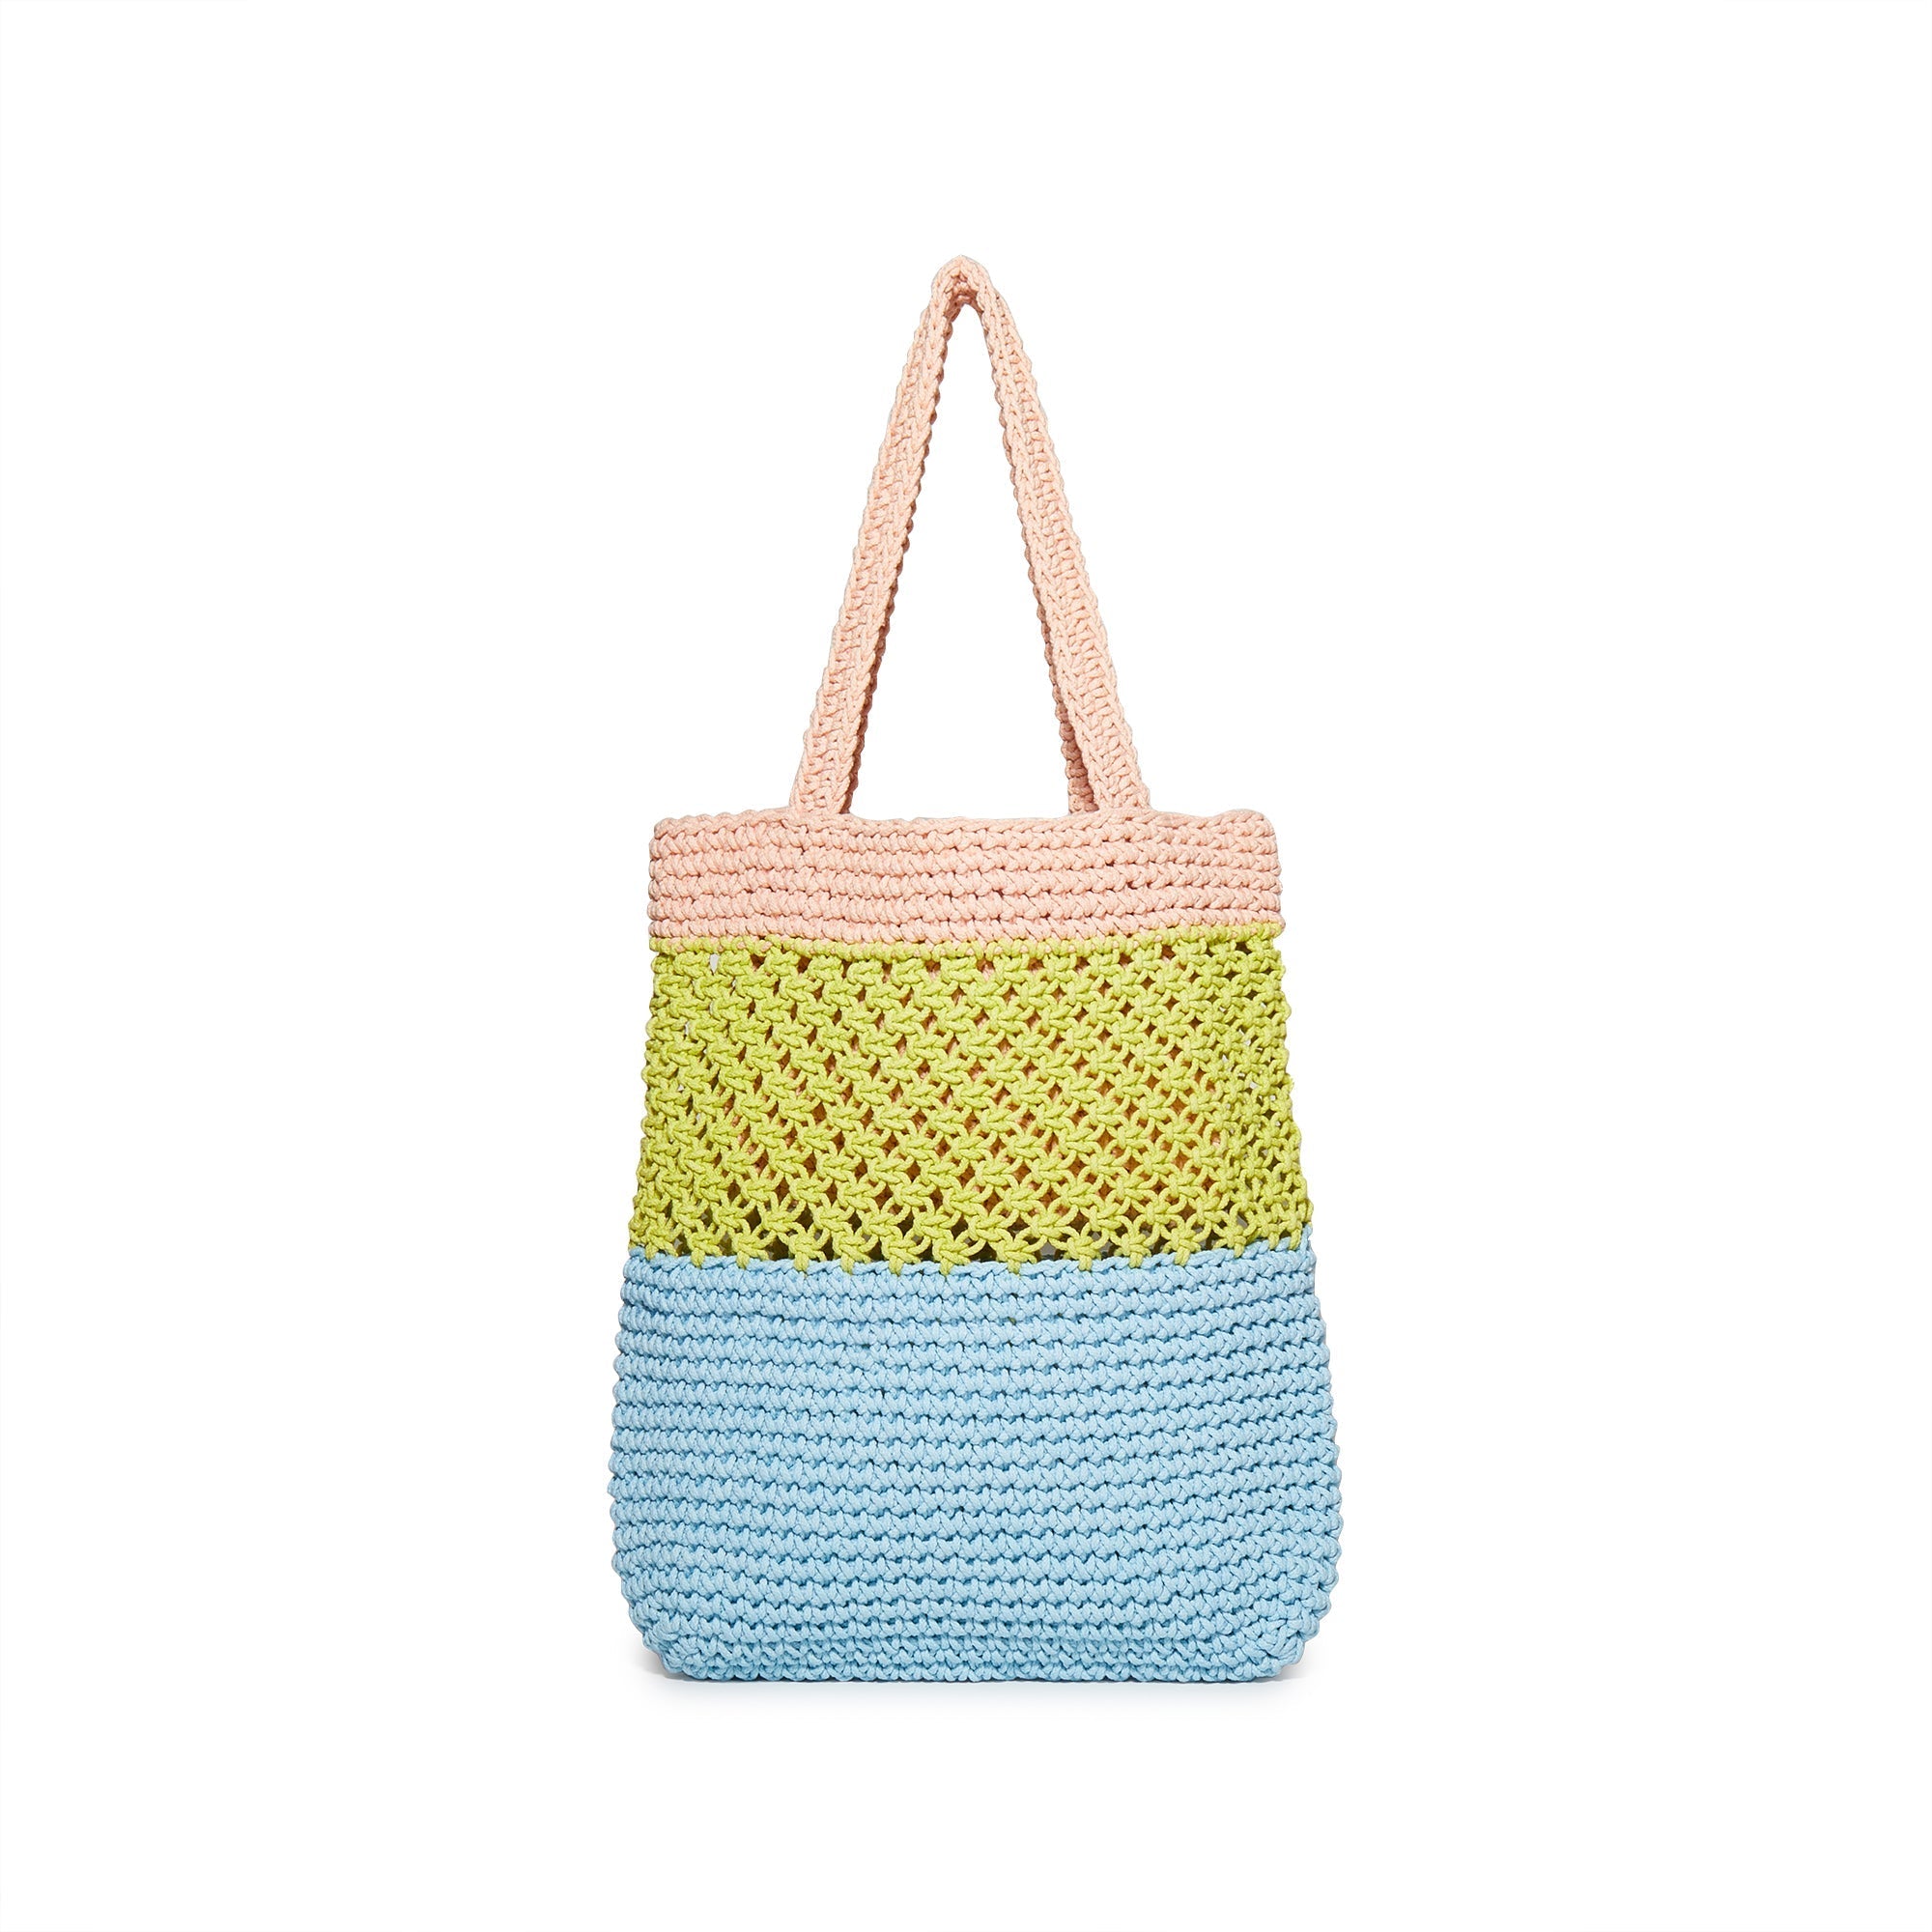 Rainbow Tote Bag: Crochet pattern